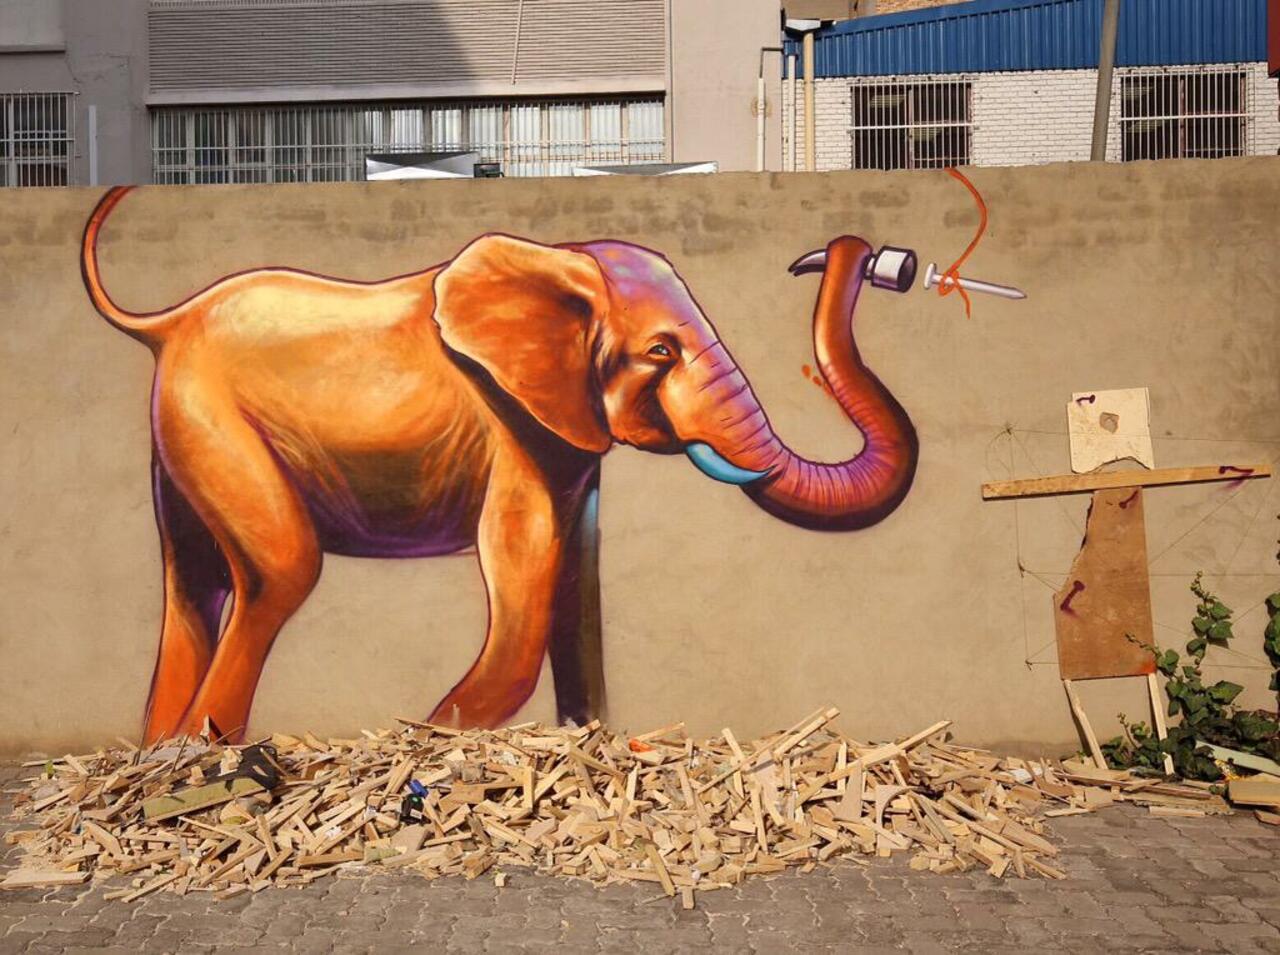 RT @2summers: The Elephant Builder  #cityofgold #elephant #graffiti #streetart #discoverjoburg #joburg Piece by @falko1graffiti http://t.co/RqEEpmGSZ8